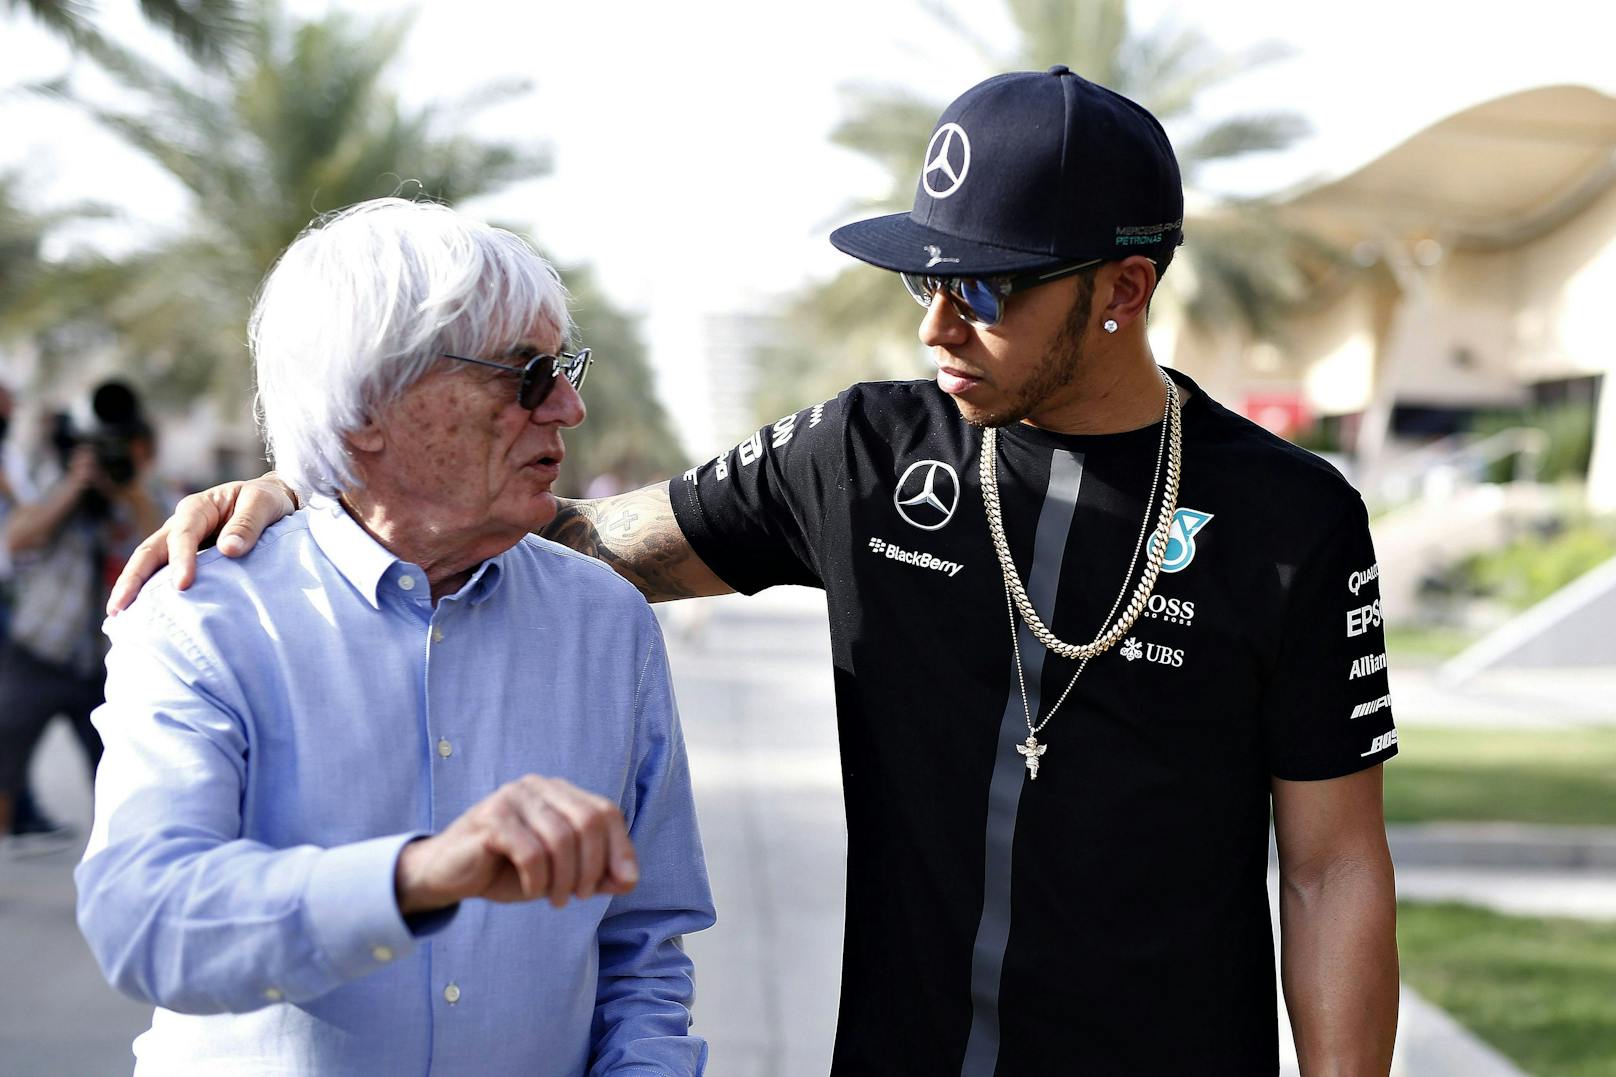 Bernie Ecclestone und Lewis Hamilton